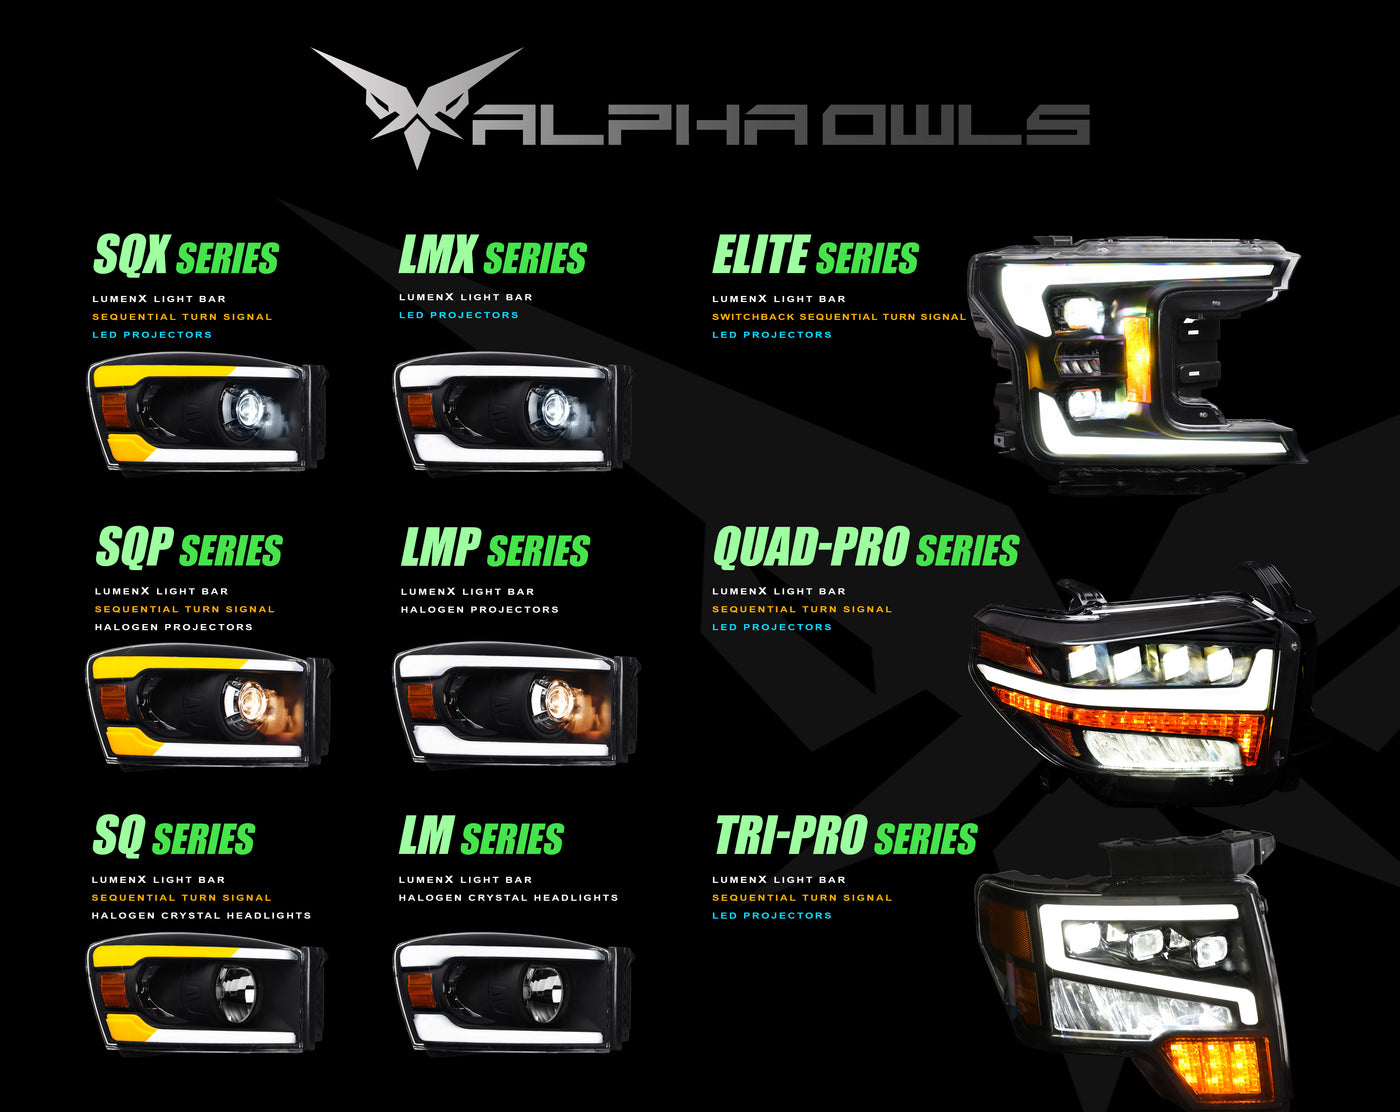 Alpha Owls Headlights, Alpha Owls GMC Headlights, GMC 1999-2006 Headlights, GMC Sierra 1500 Headlights, Headlights, Chrome housing Headlights